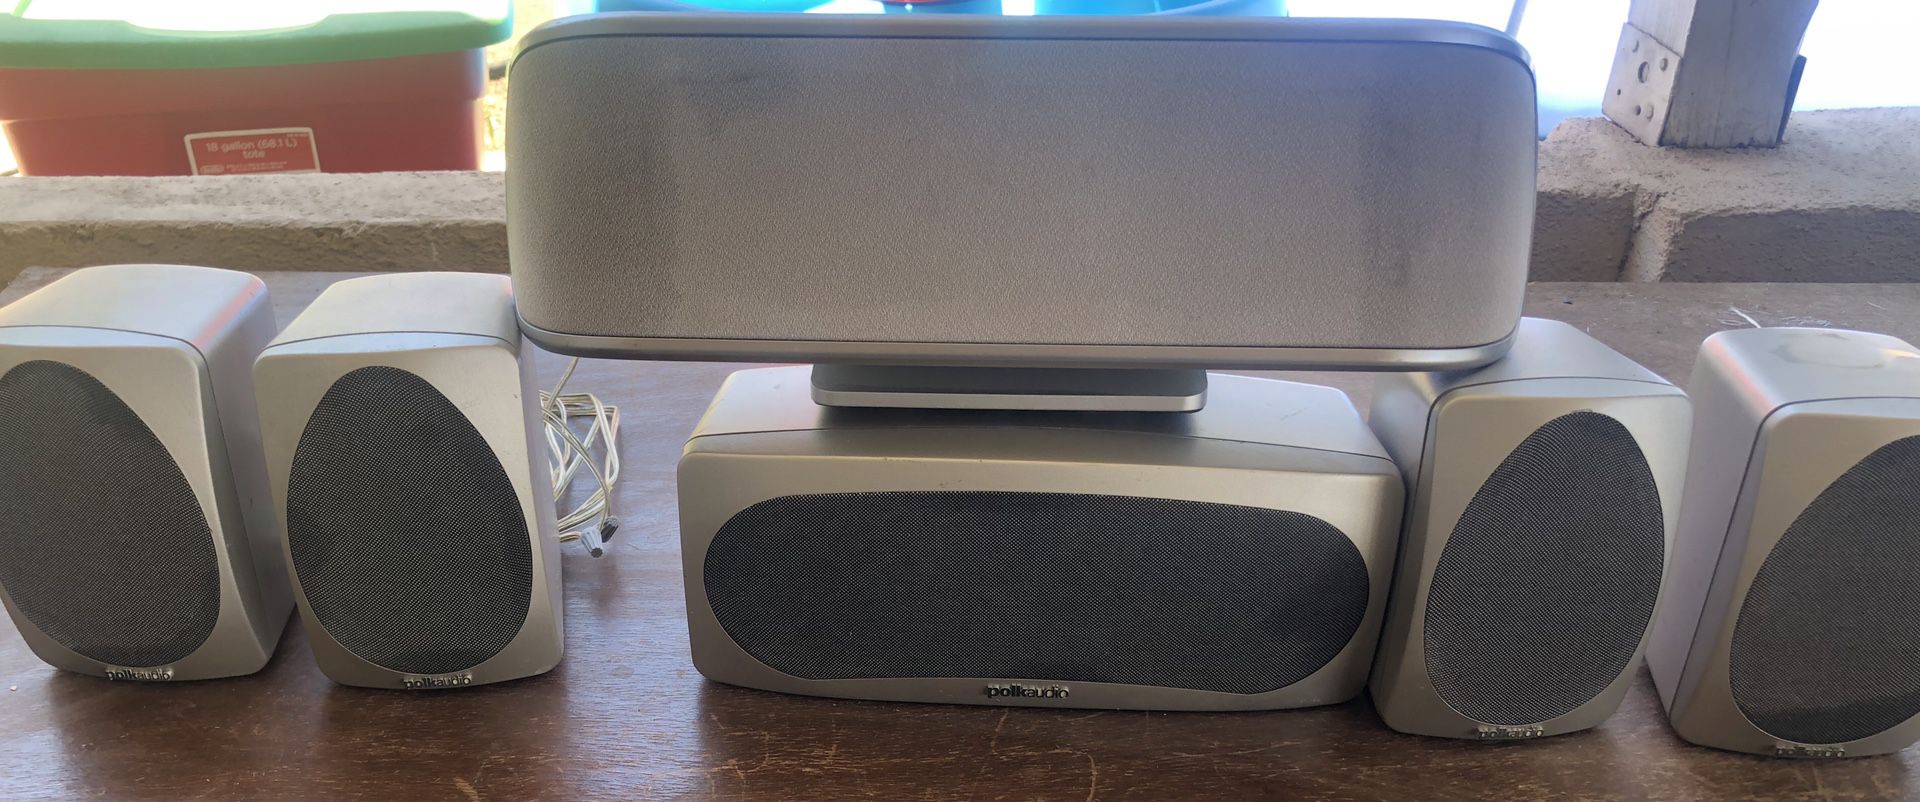 Polk Audio Surround Sound Speakers Better than Bose